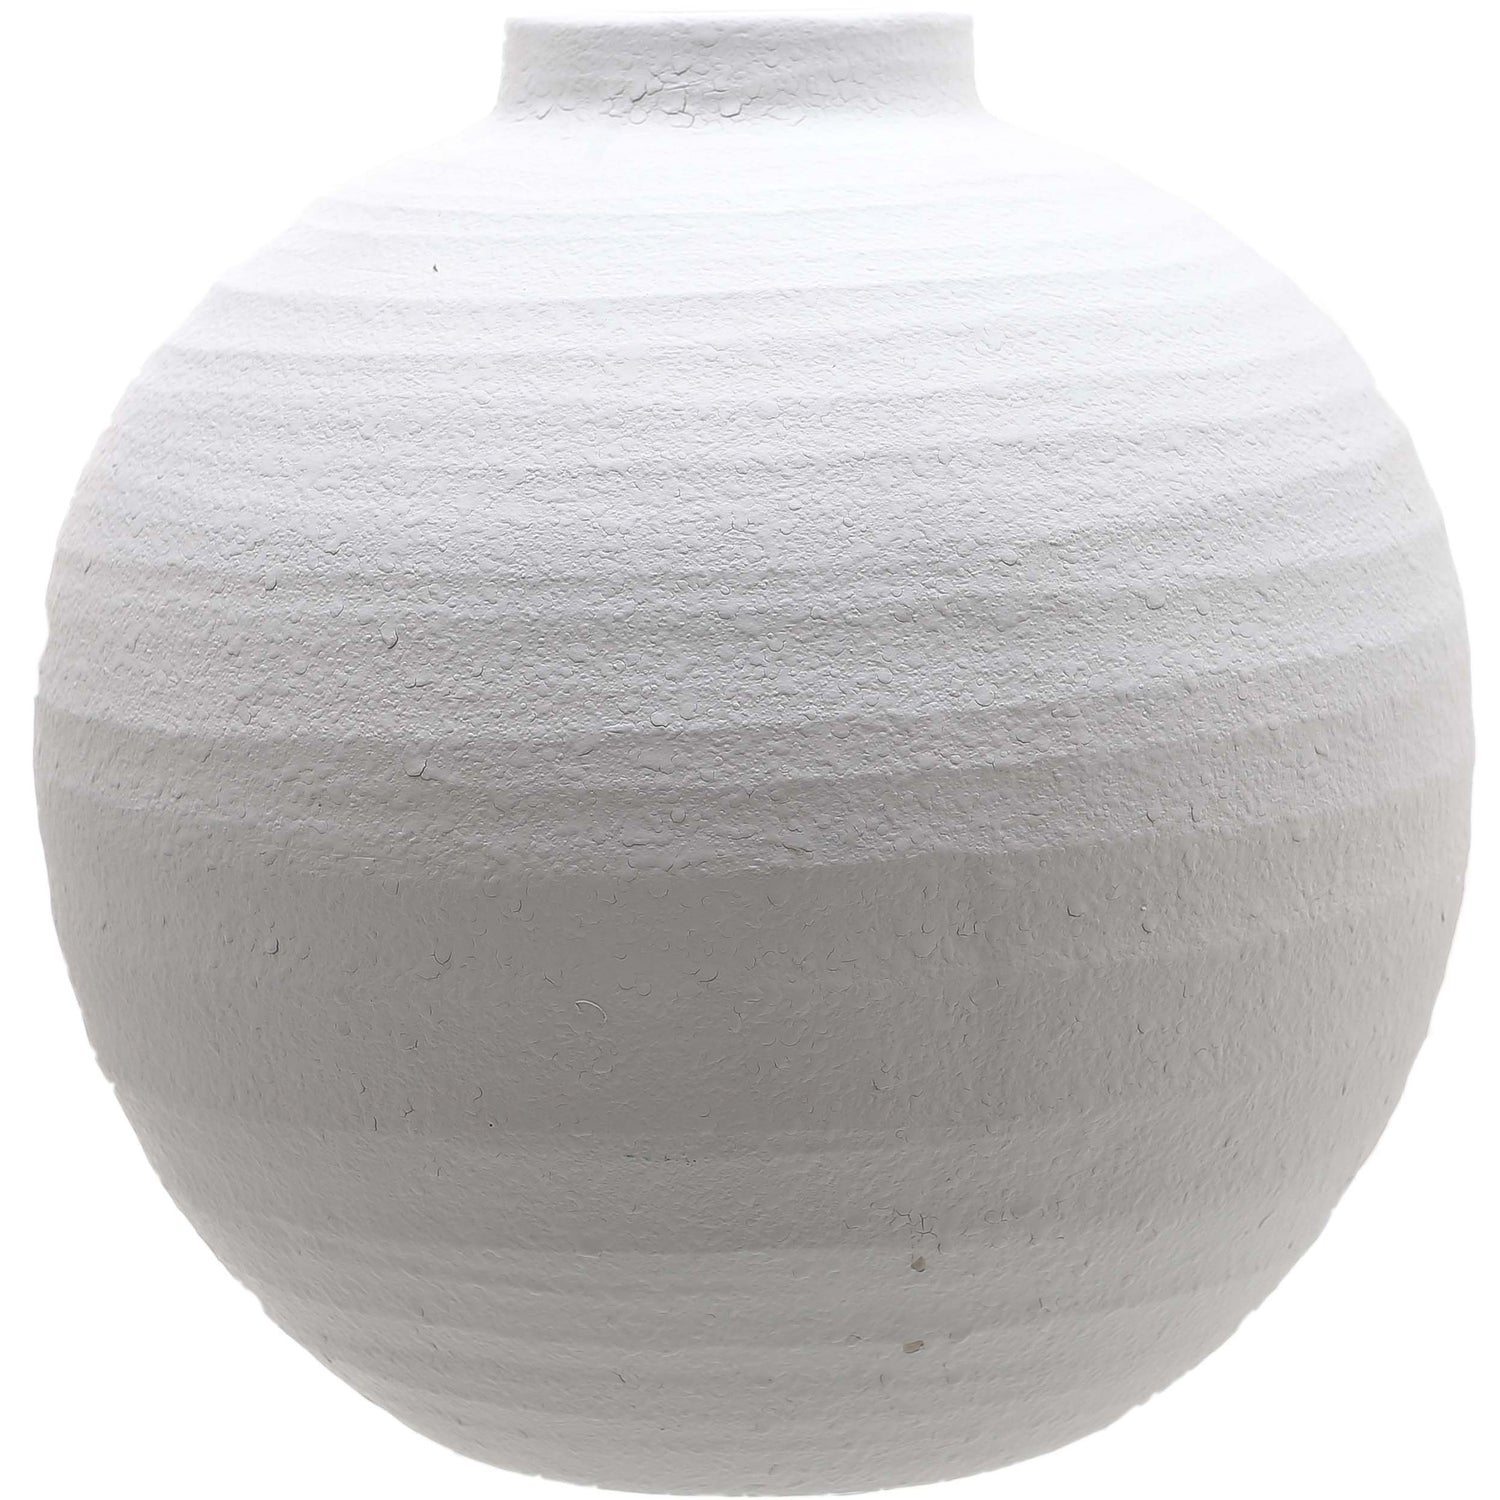 View Tiber Large Matt White Ceramic Vase information